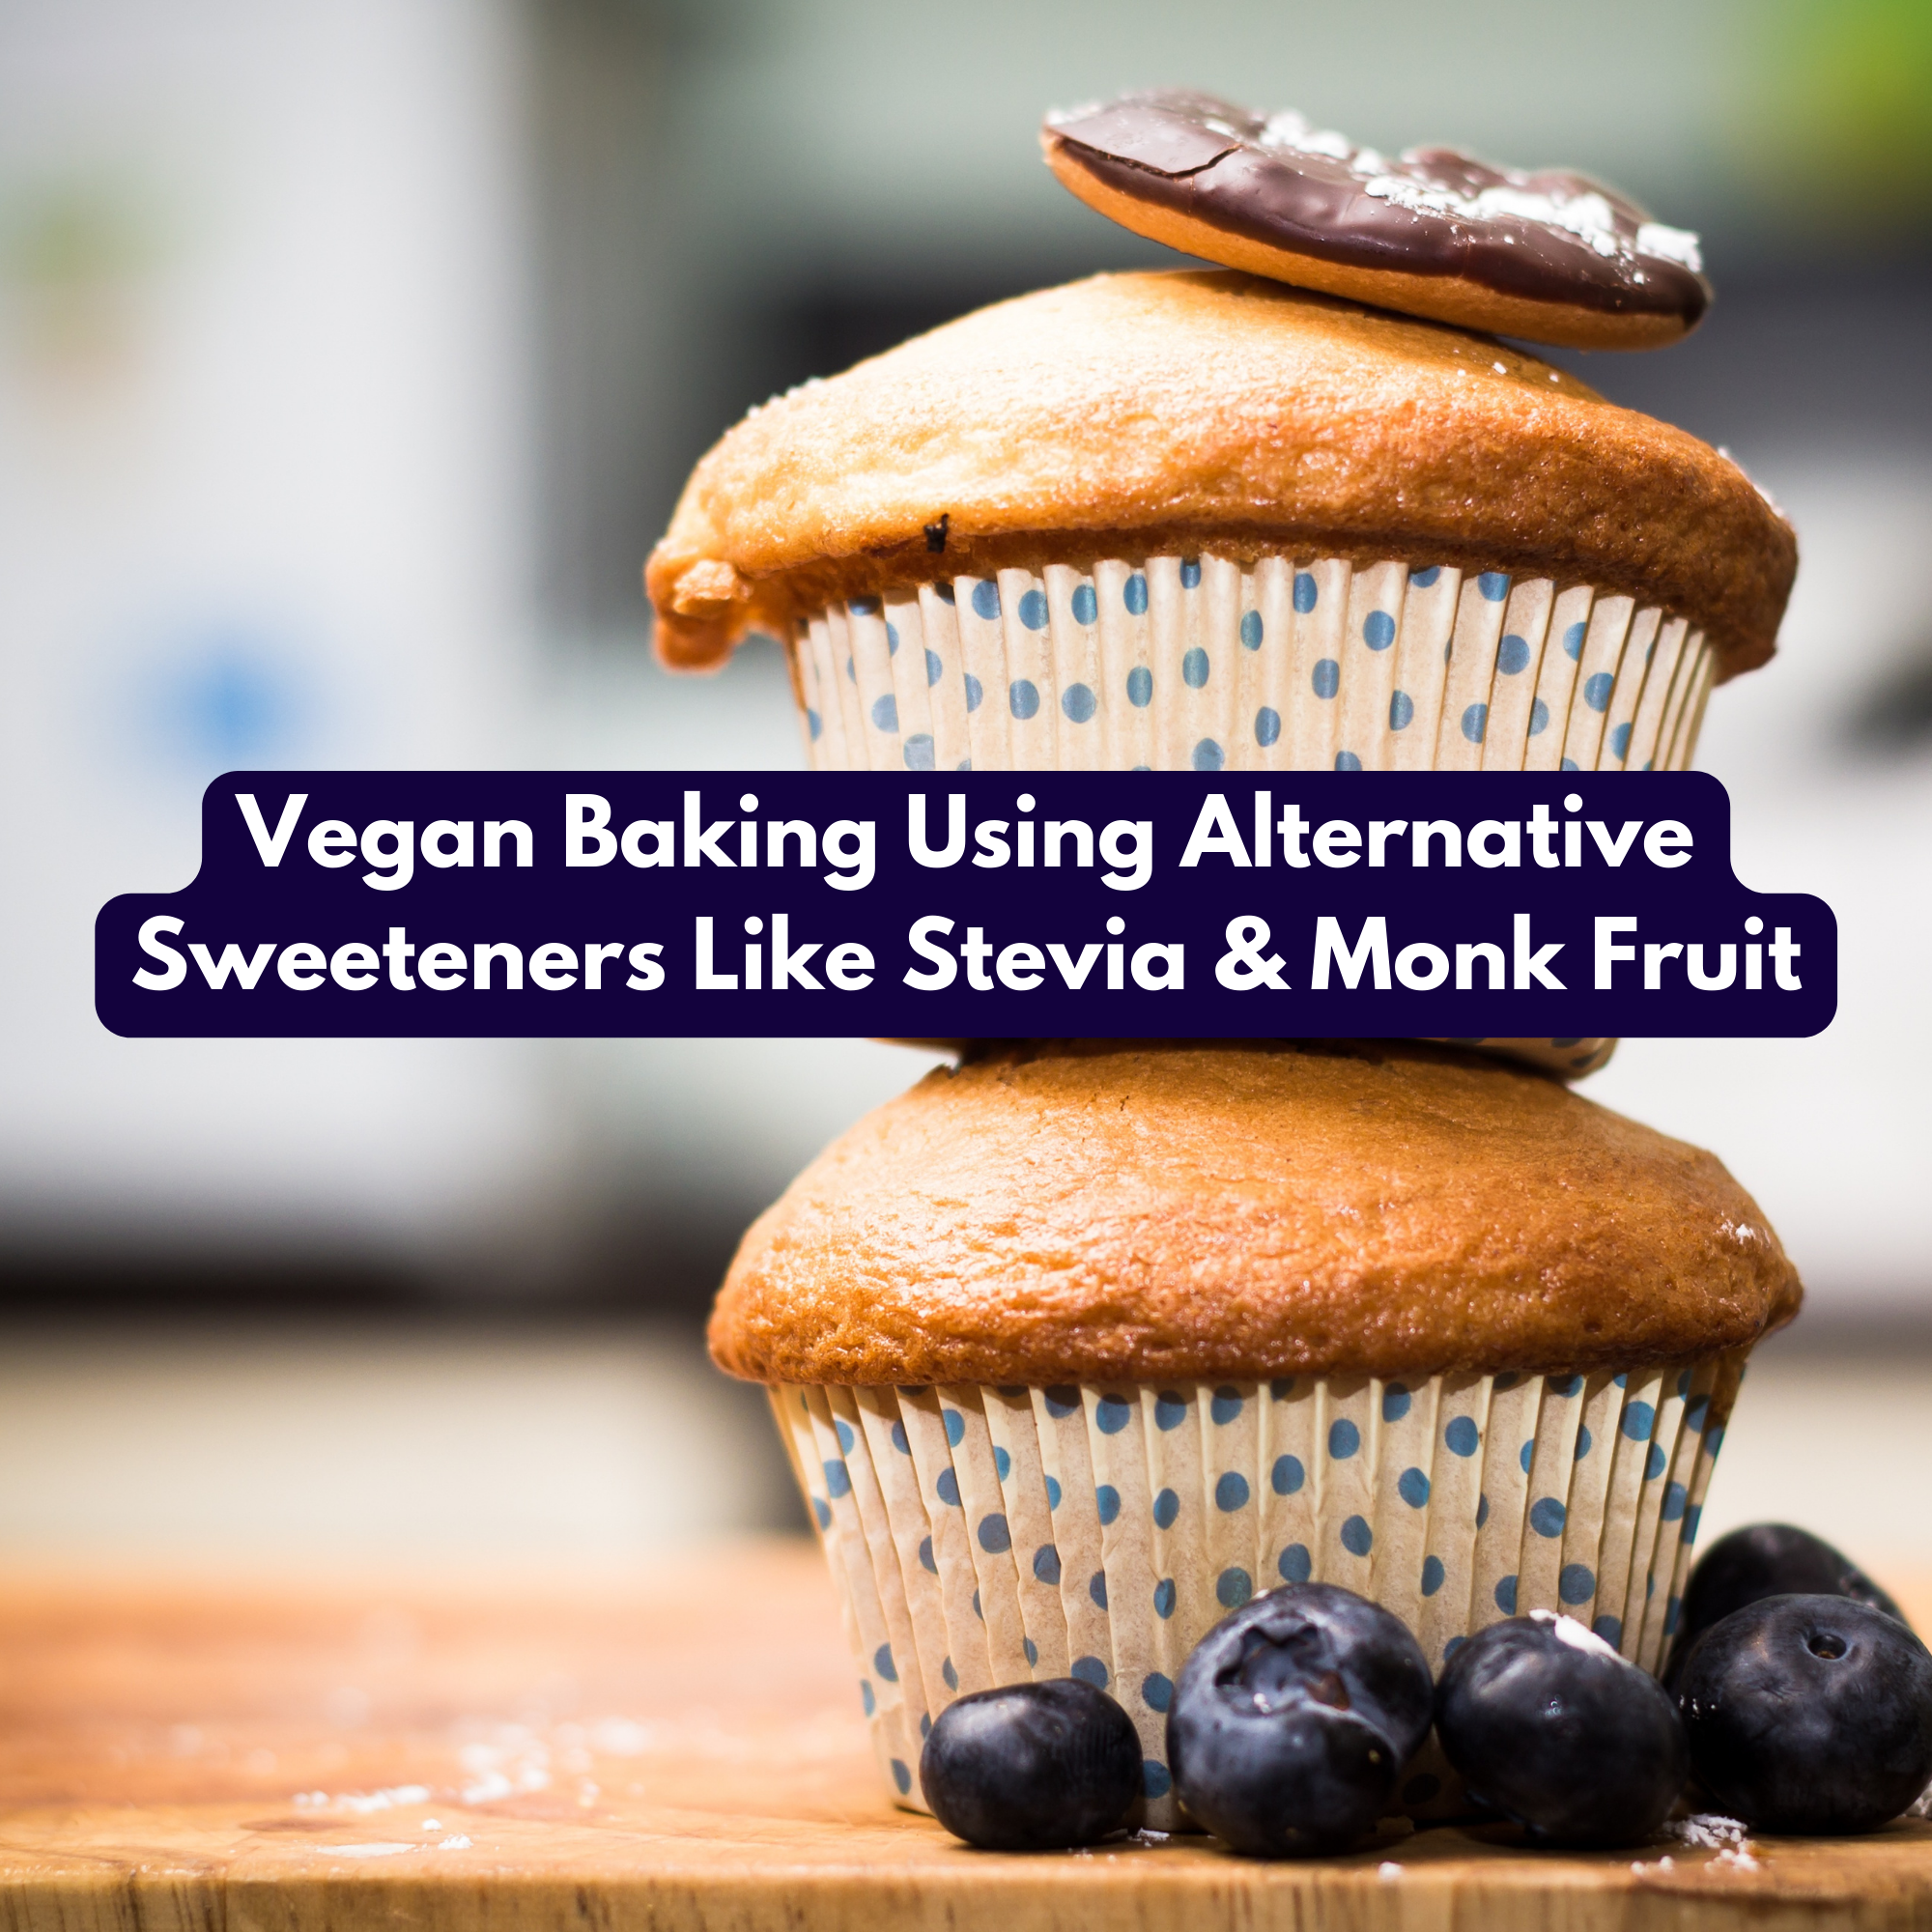 Vegan Baking Using Alternative Sweeteners Like Stevia & Monk Fruit